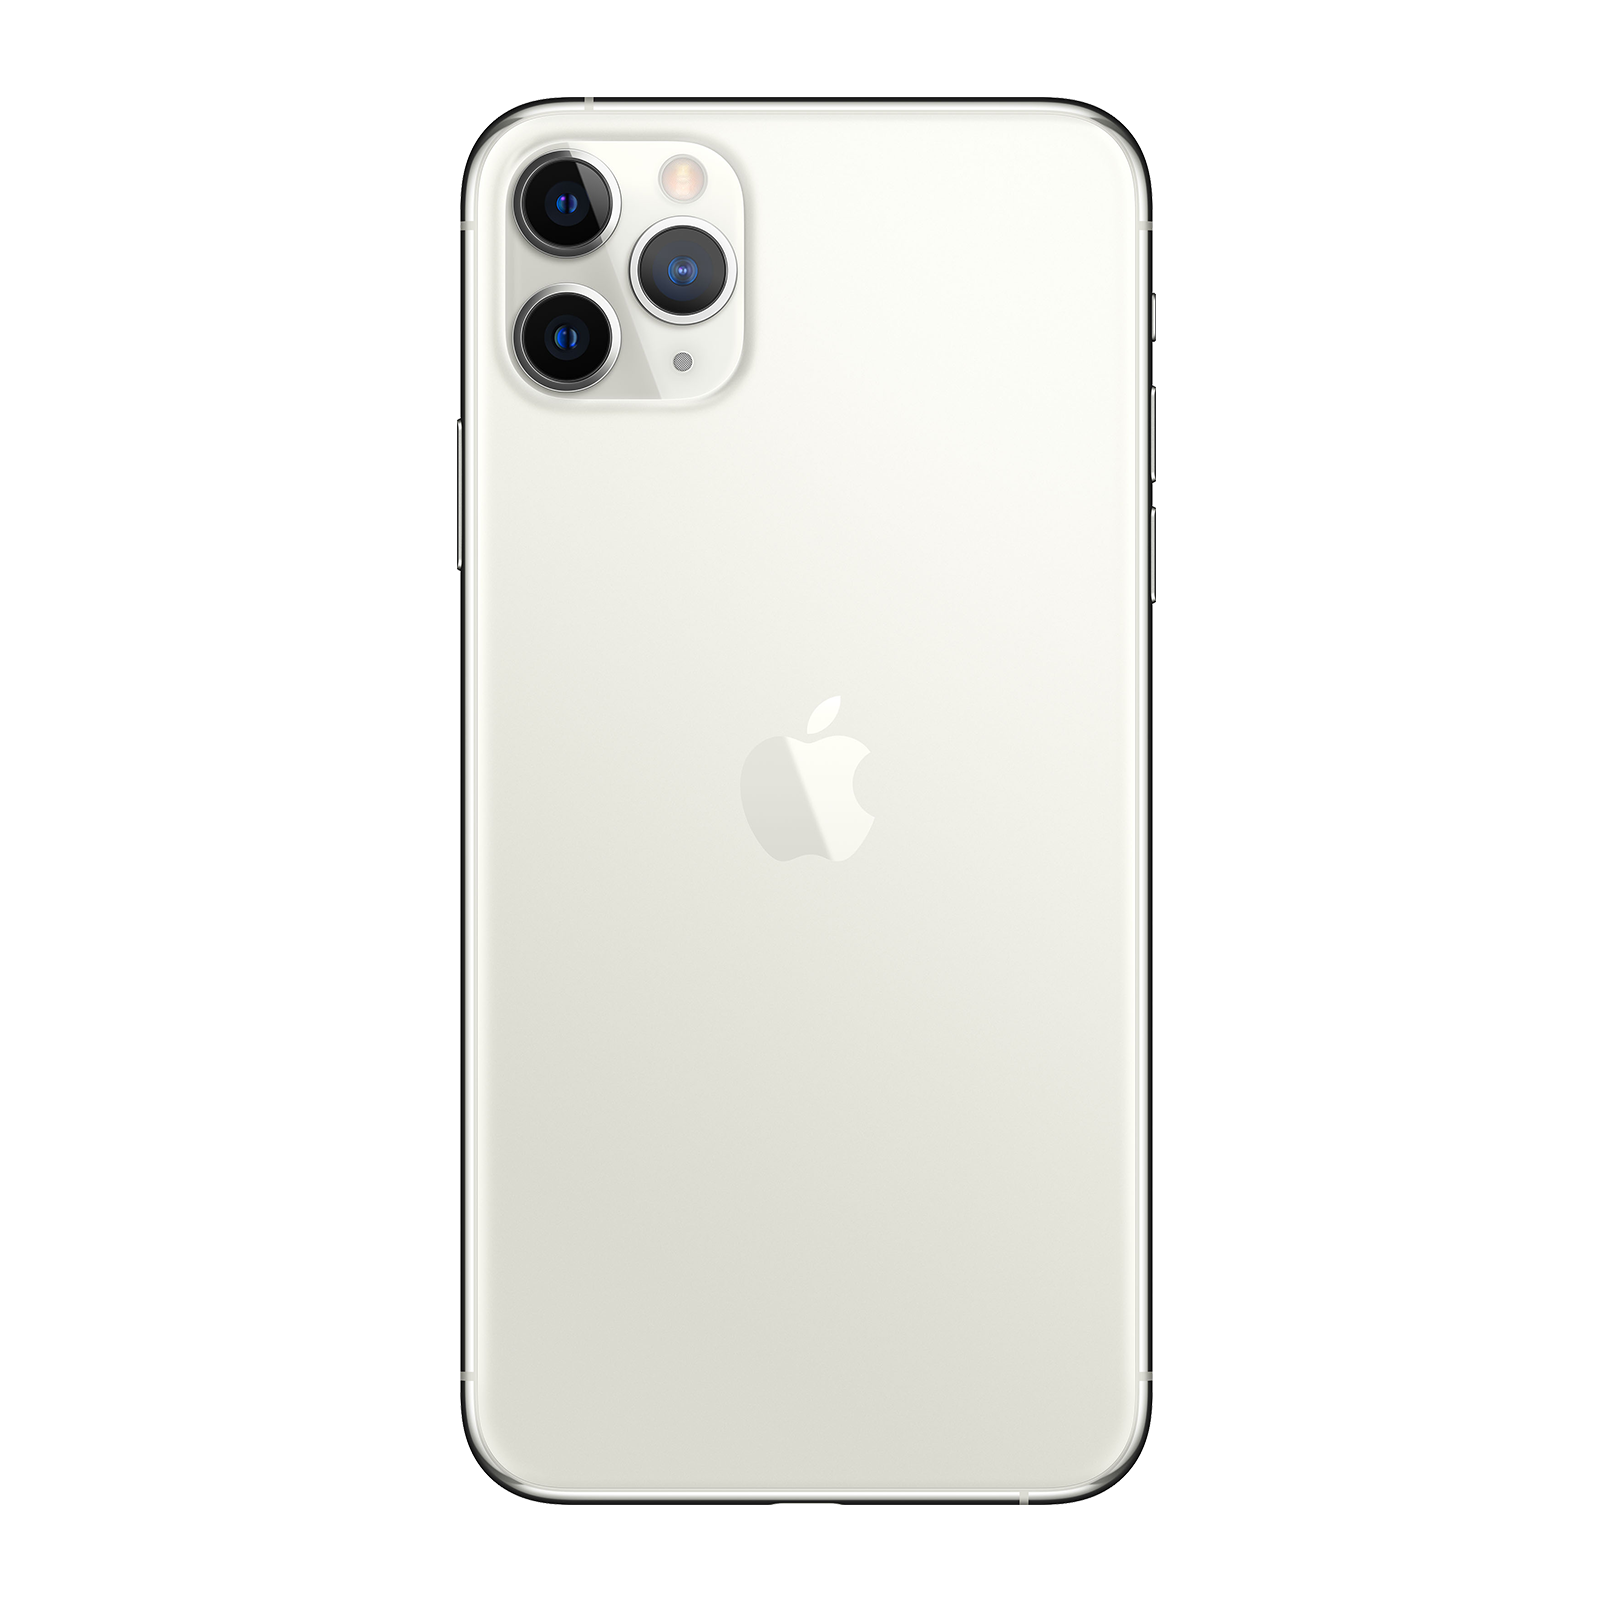 Apple iPhone 11 Pro 64GB Silver Pristine - Unlocked